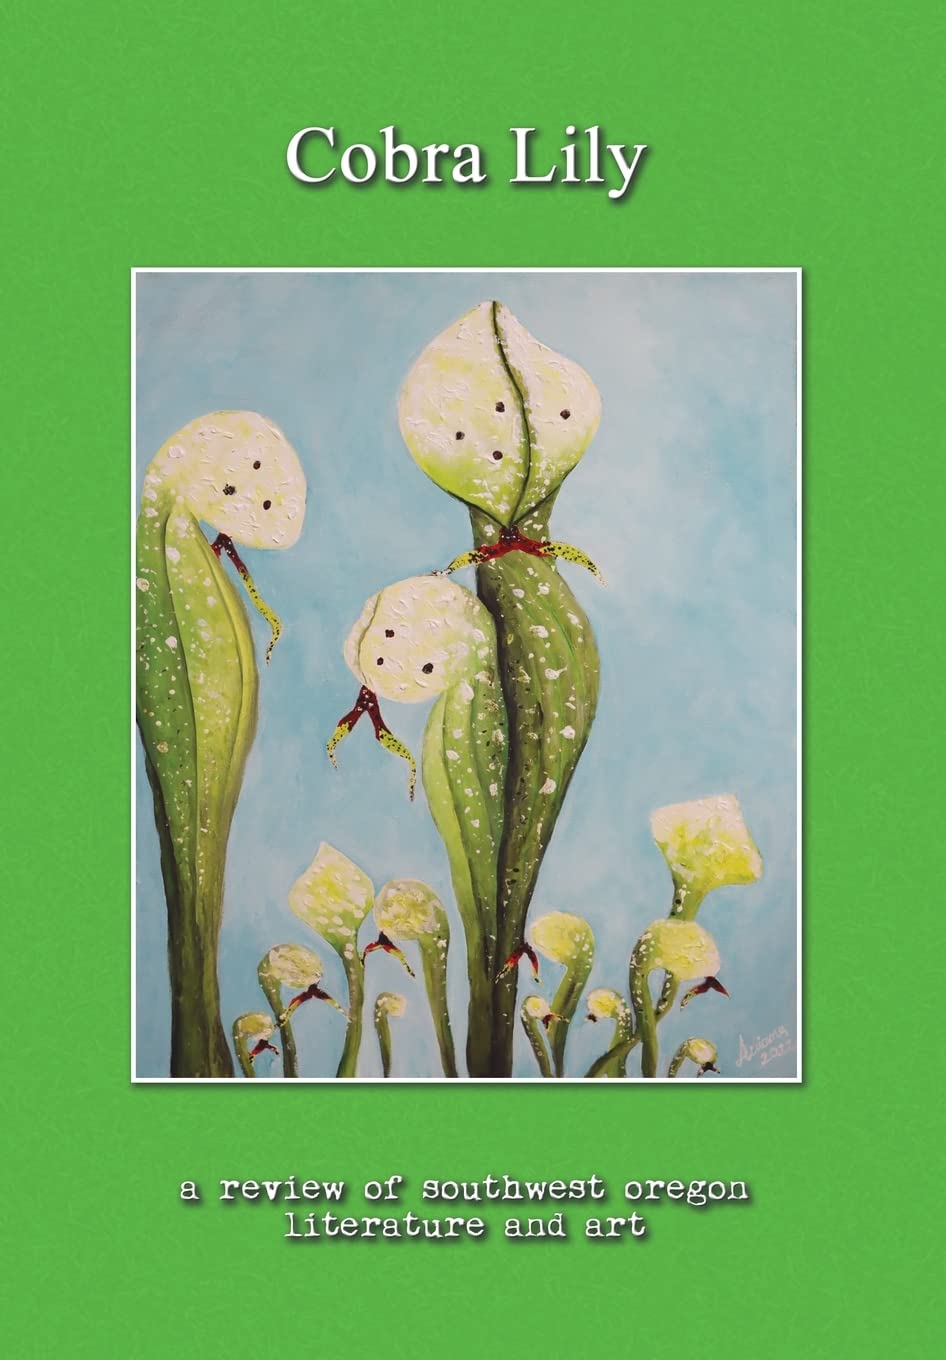 Cobra Lily: a review of southwest oregon literature and art (Cobra Lily: A Review of Southwest Oregon Literature & Art)